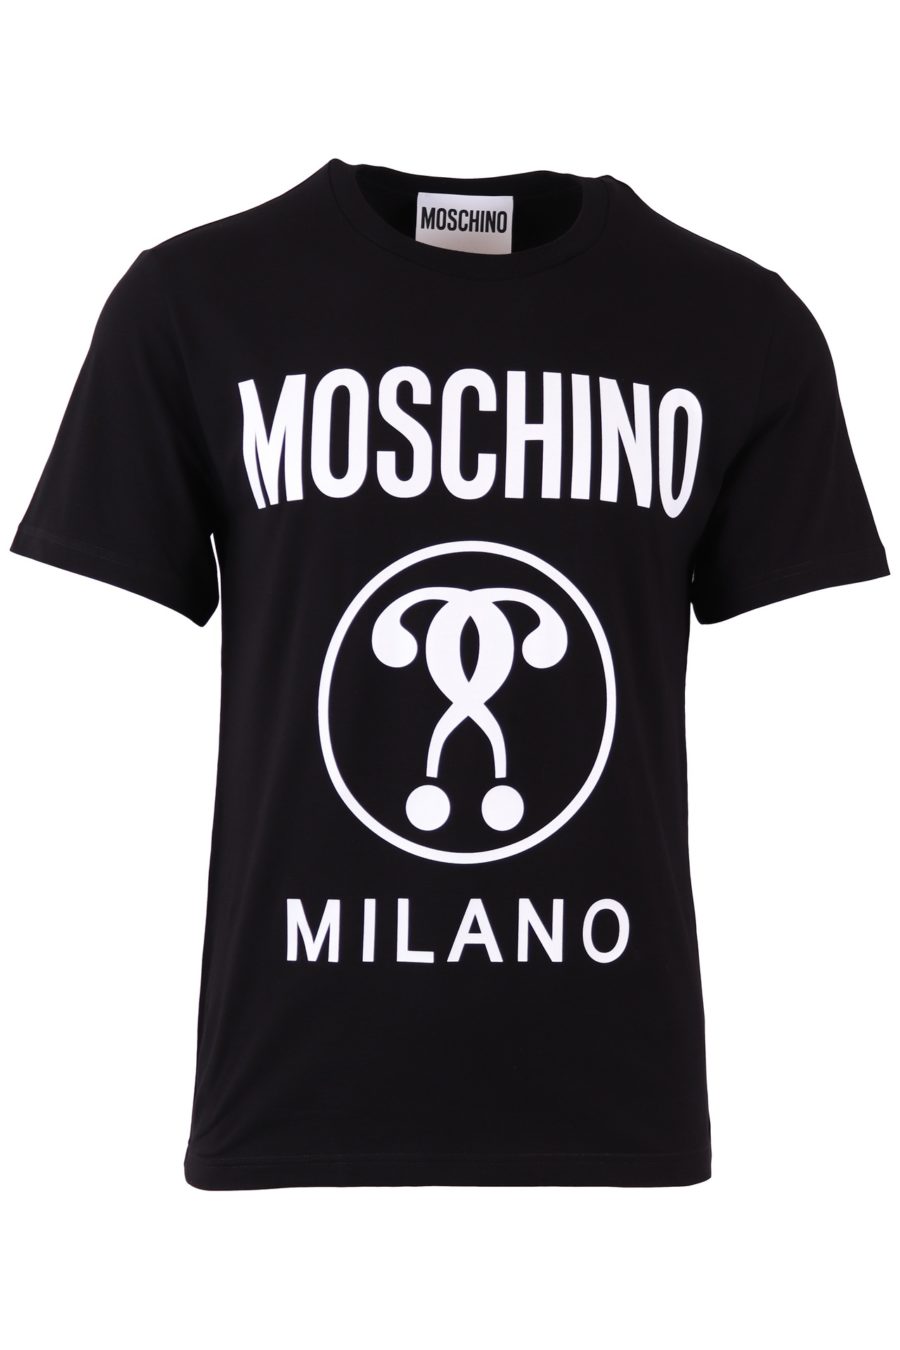 Camiseta Moschino Couture negra con logo y doble pregunta delantera - c53a4e4af40007f0086e65eda6be386dcc8db177